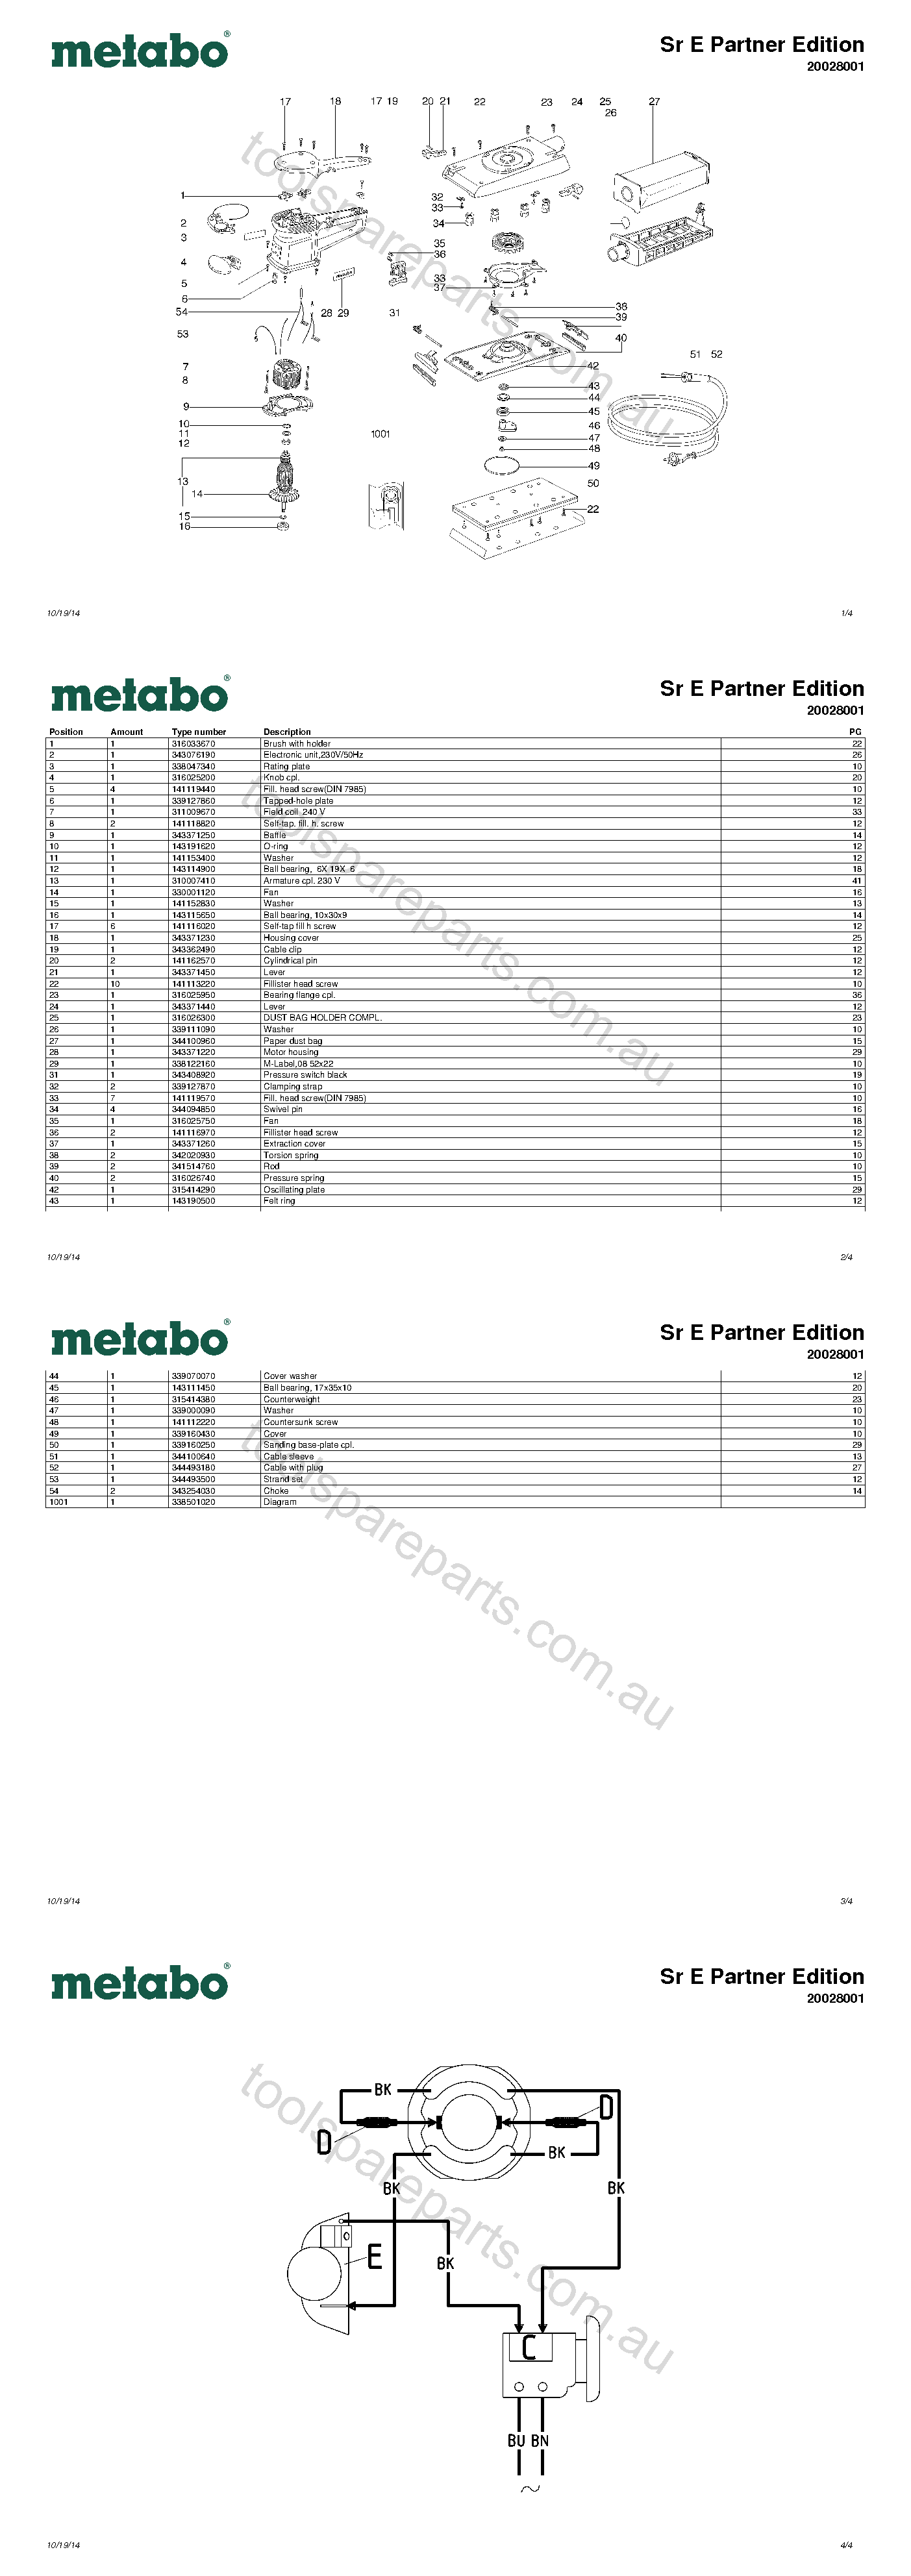 Metabo Sr E Partner Edition 20028001  Diagram 1